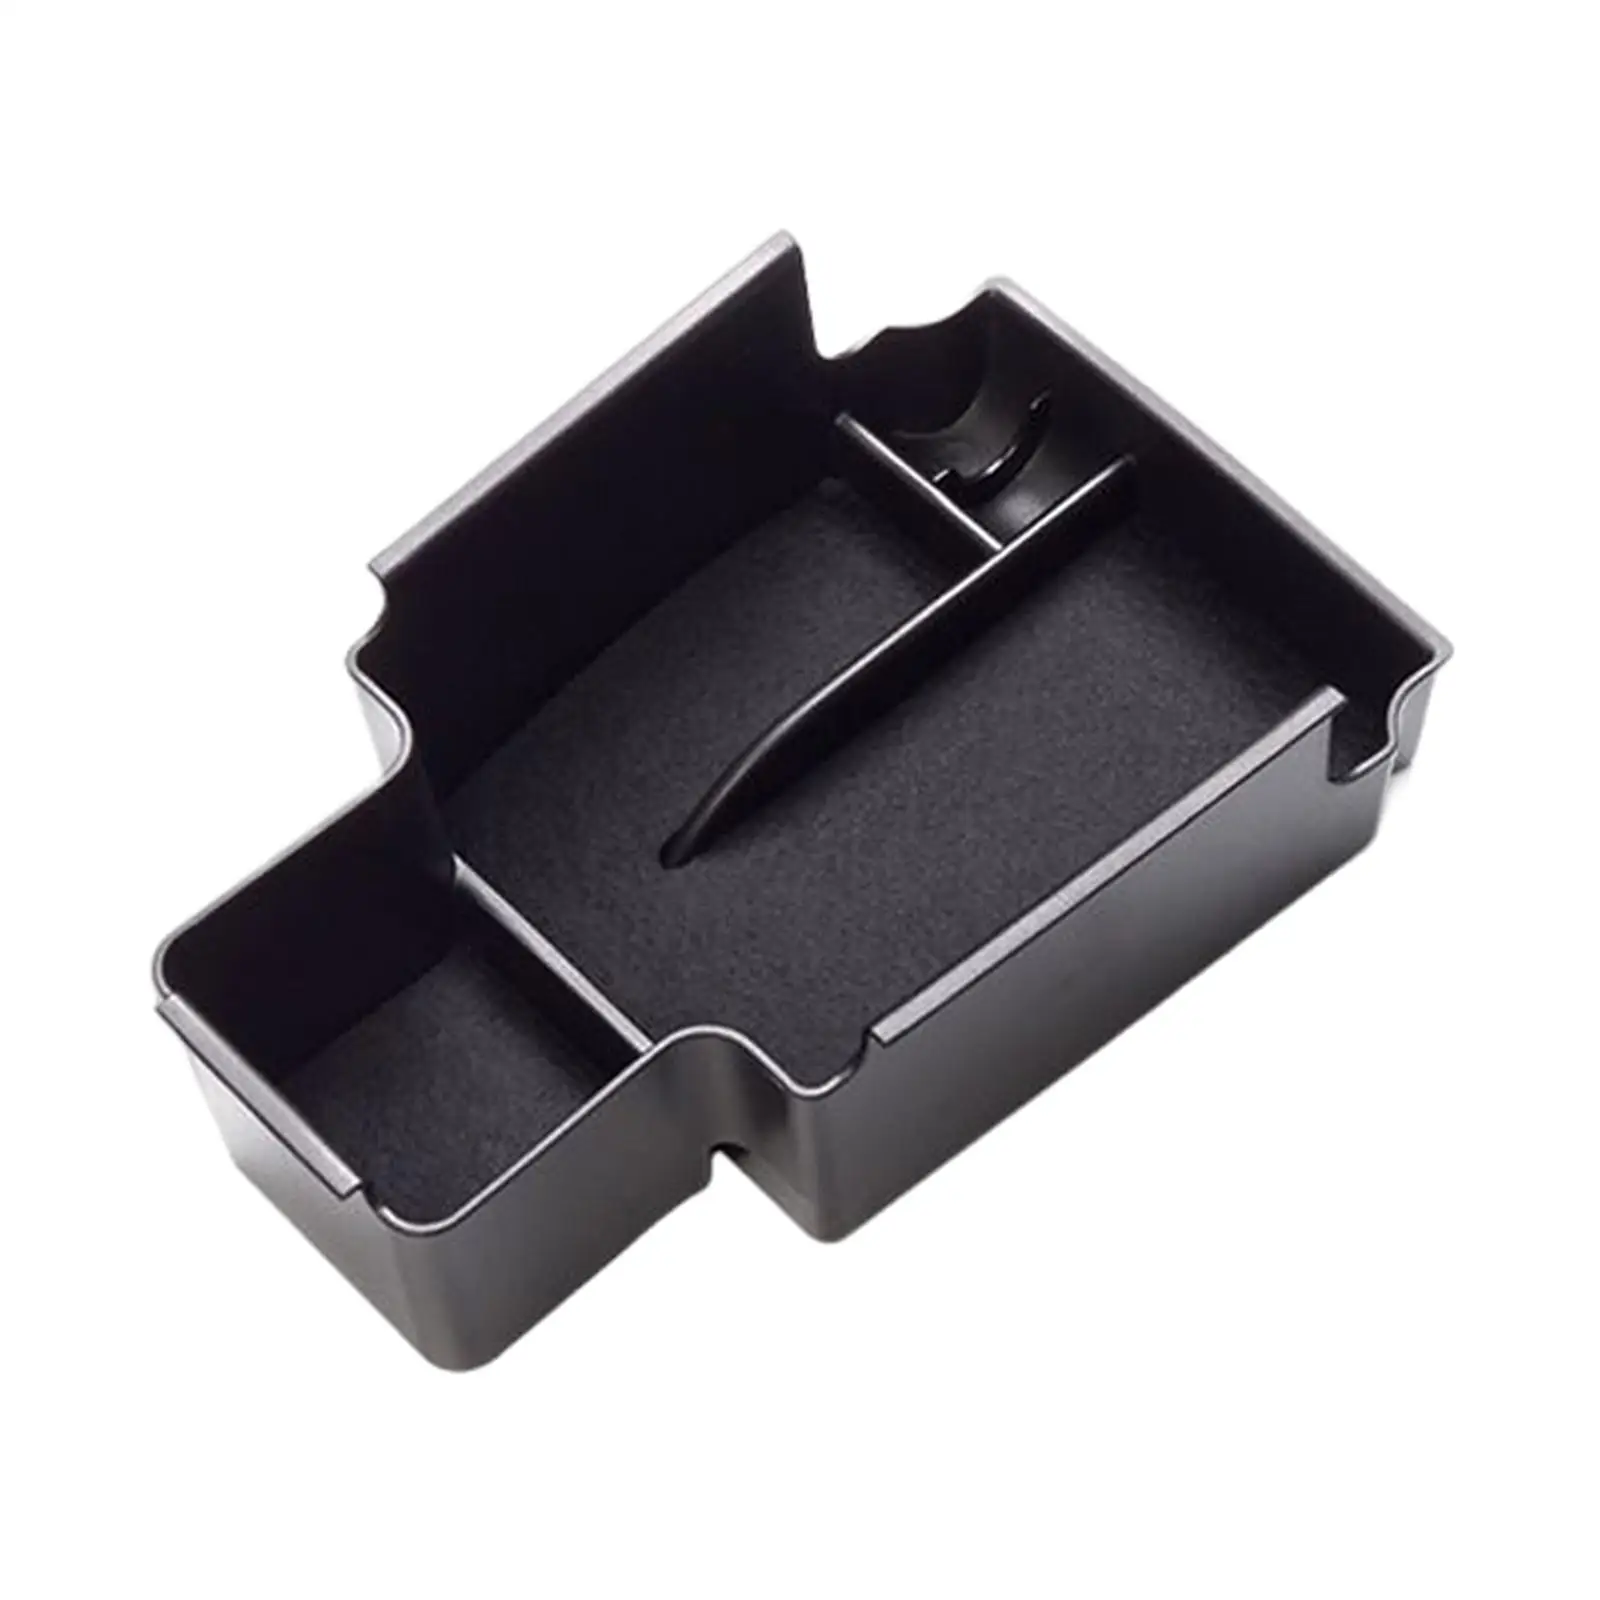 Car Center Console Armrest Storage Box Black Organizer Tray for Ora Gwm Good Cat Replacement High Quality